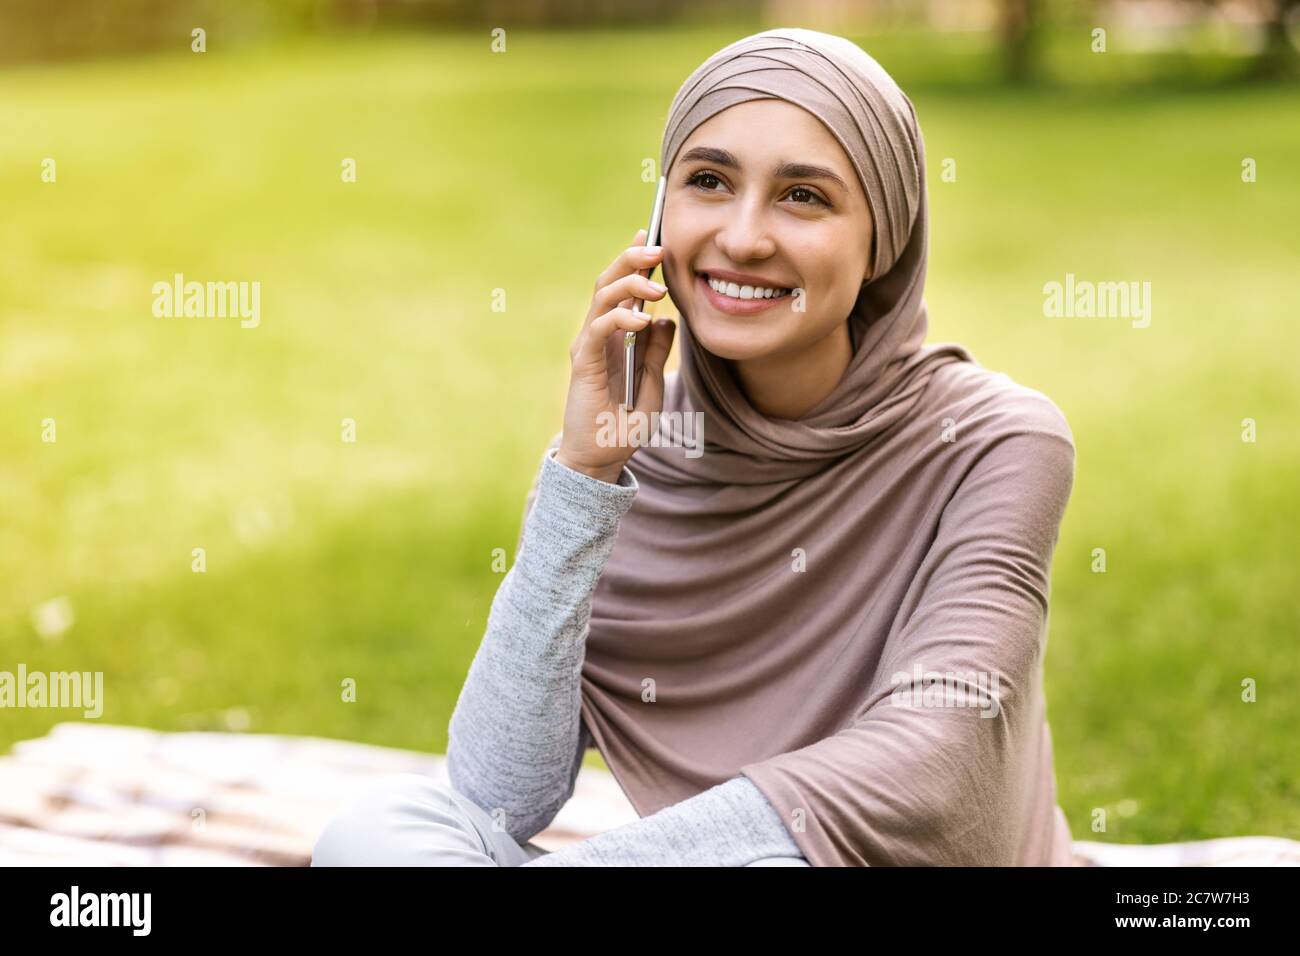 Girl number arabia mobile Saudi Arabia